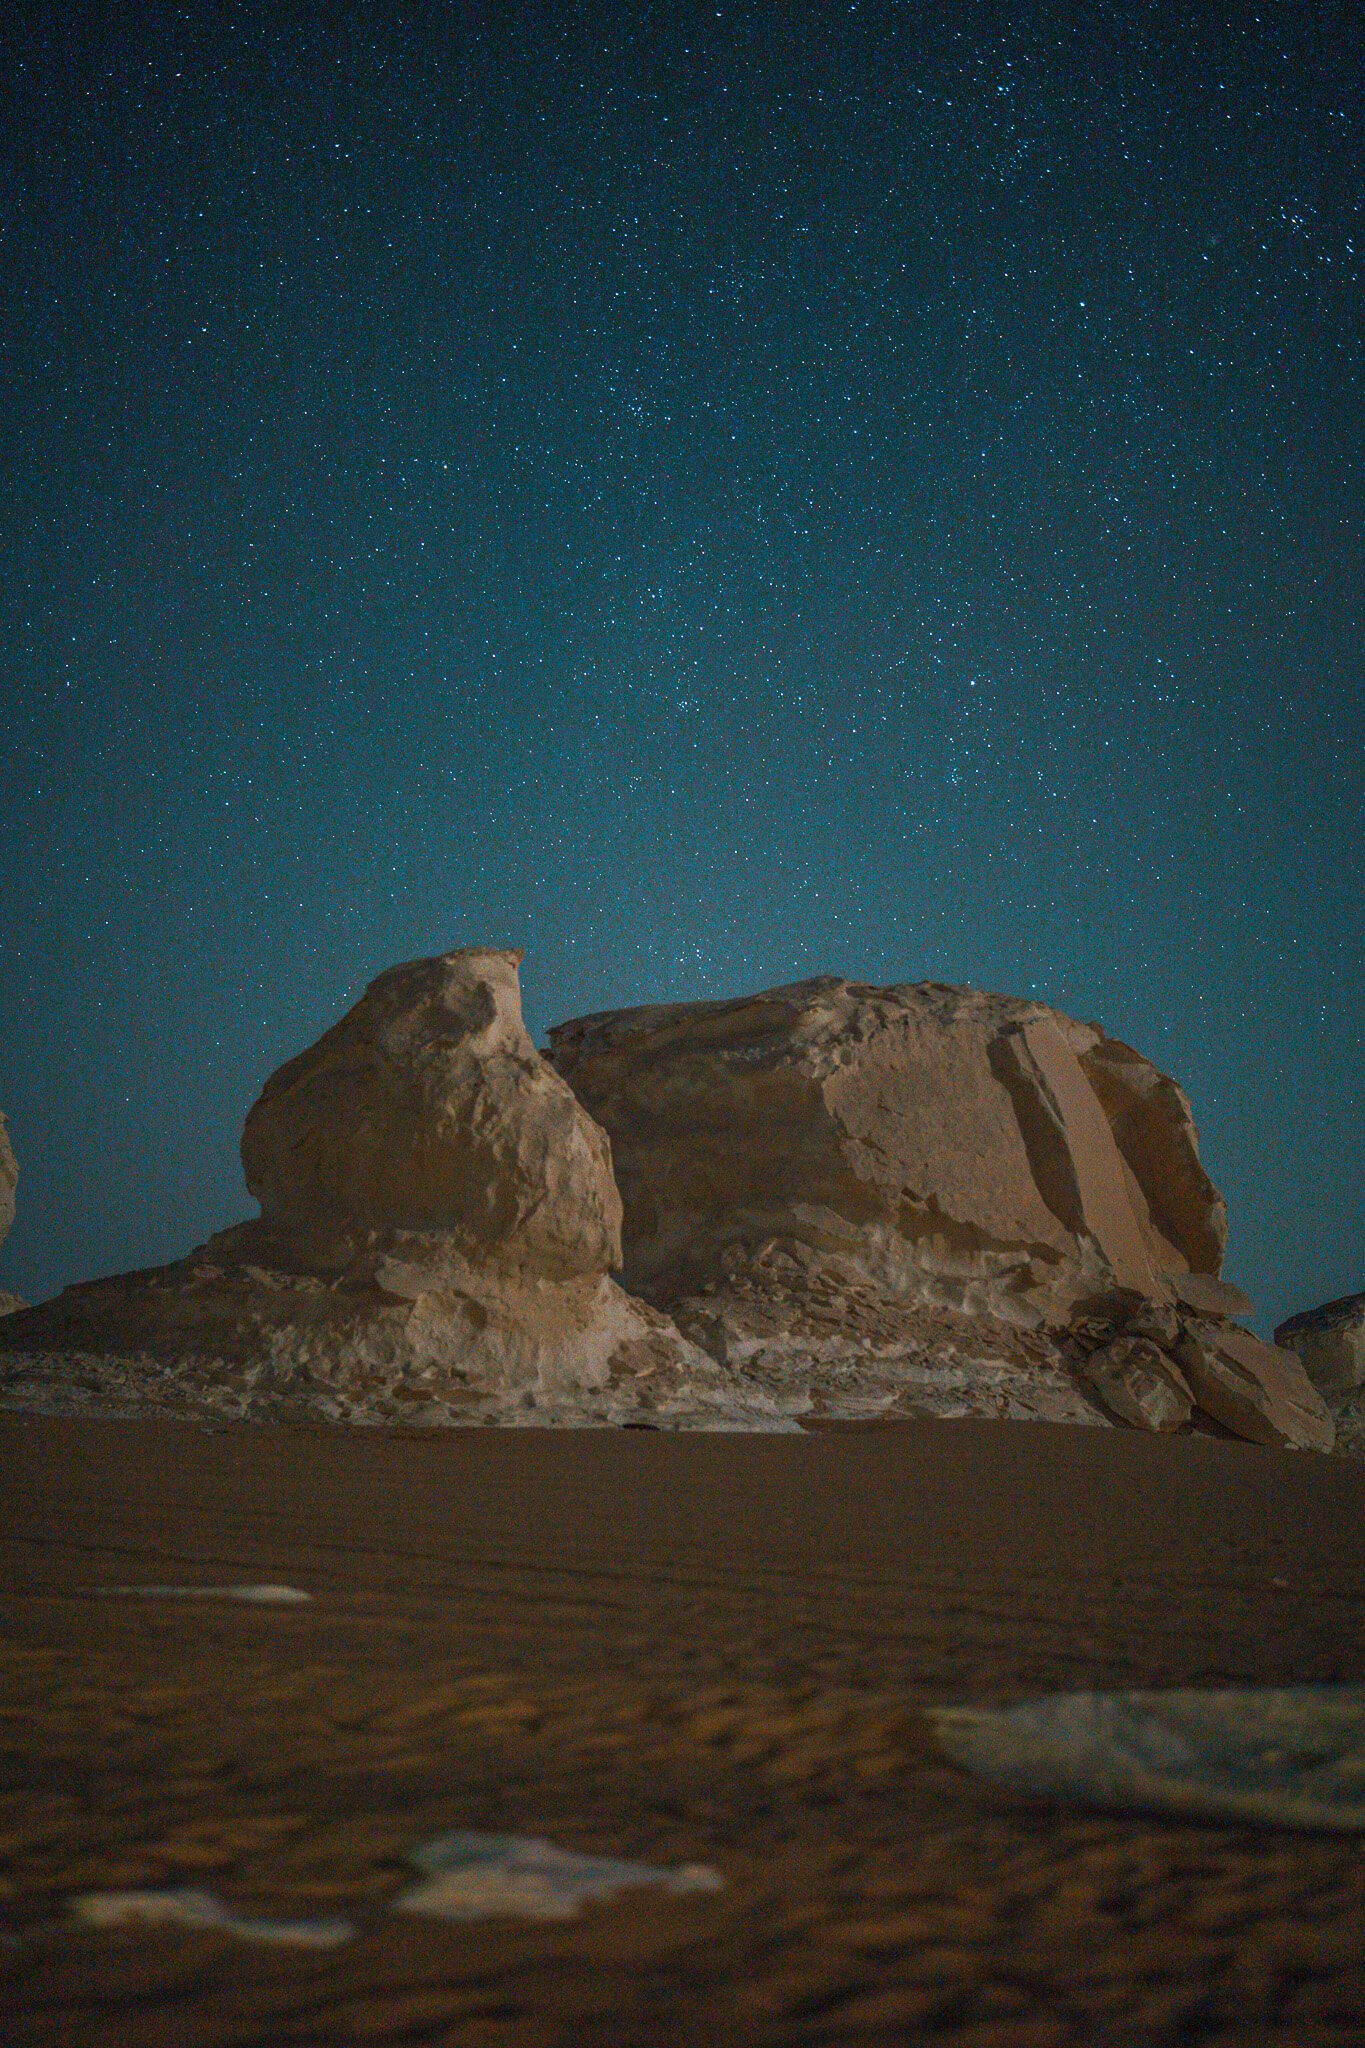 astrophotography in the white desert, Egypt